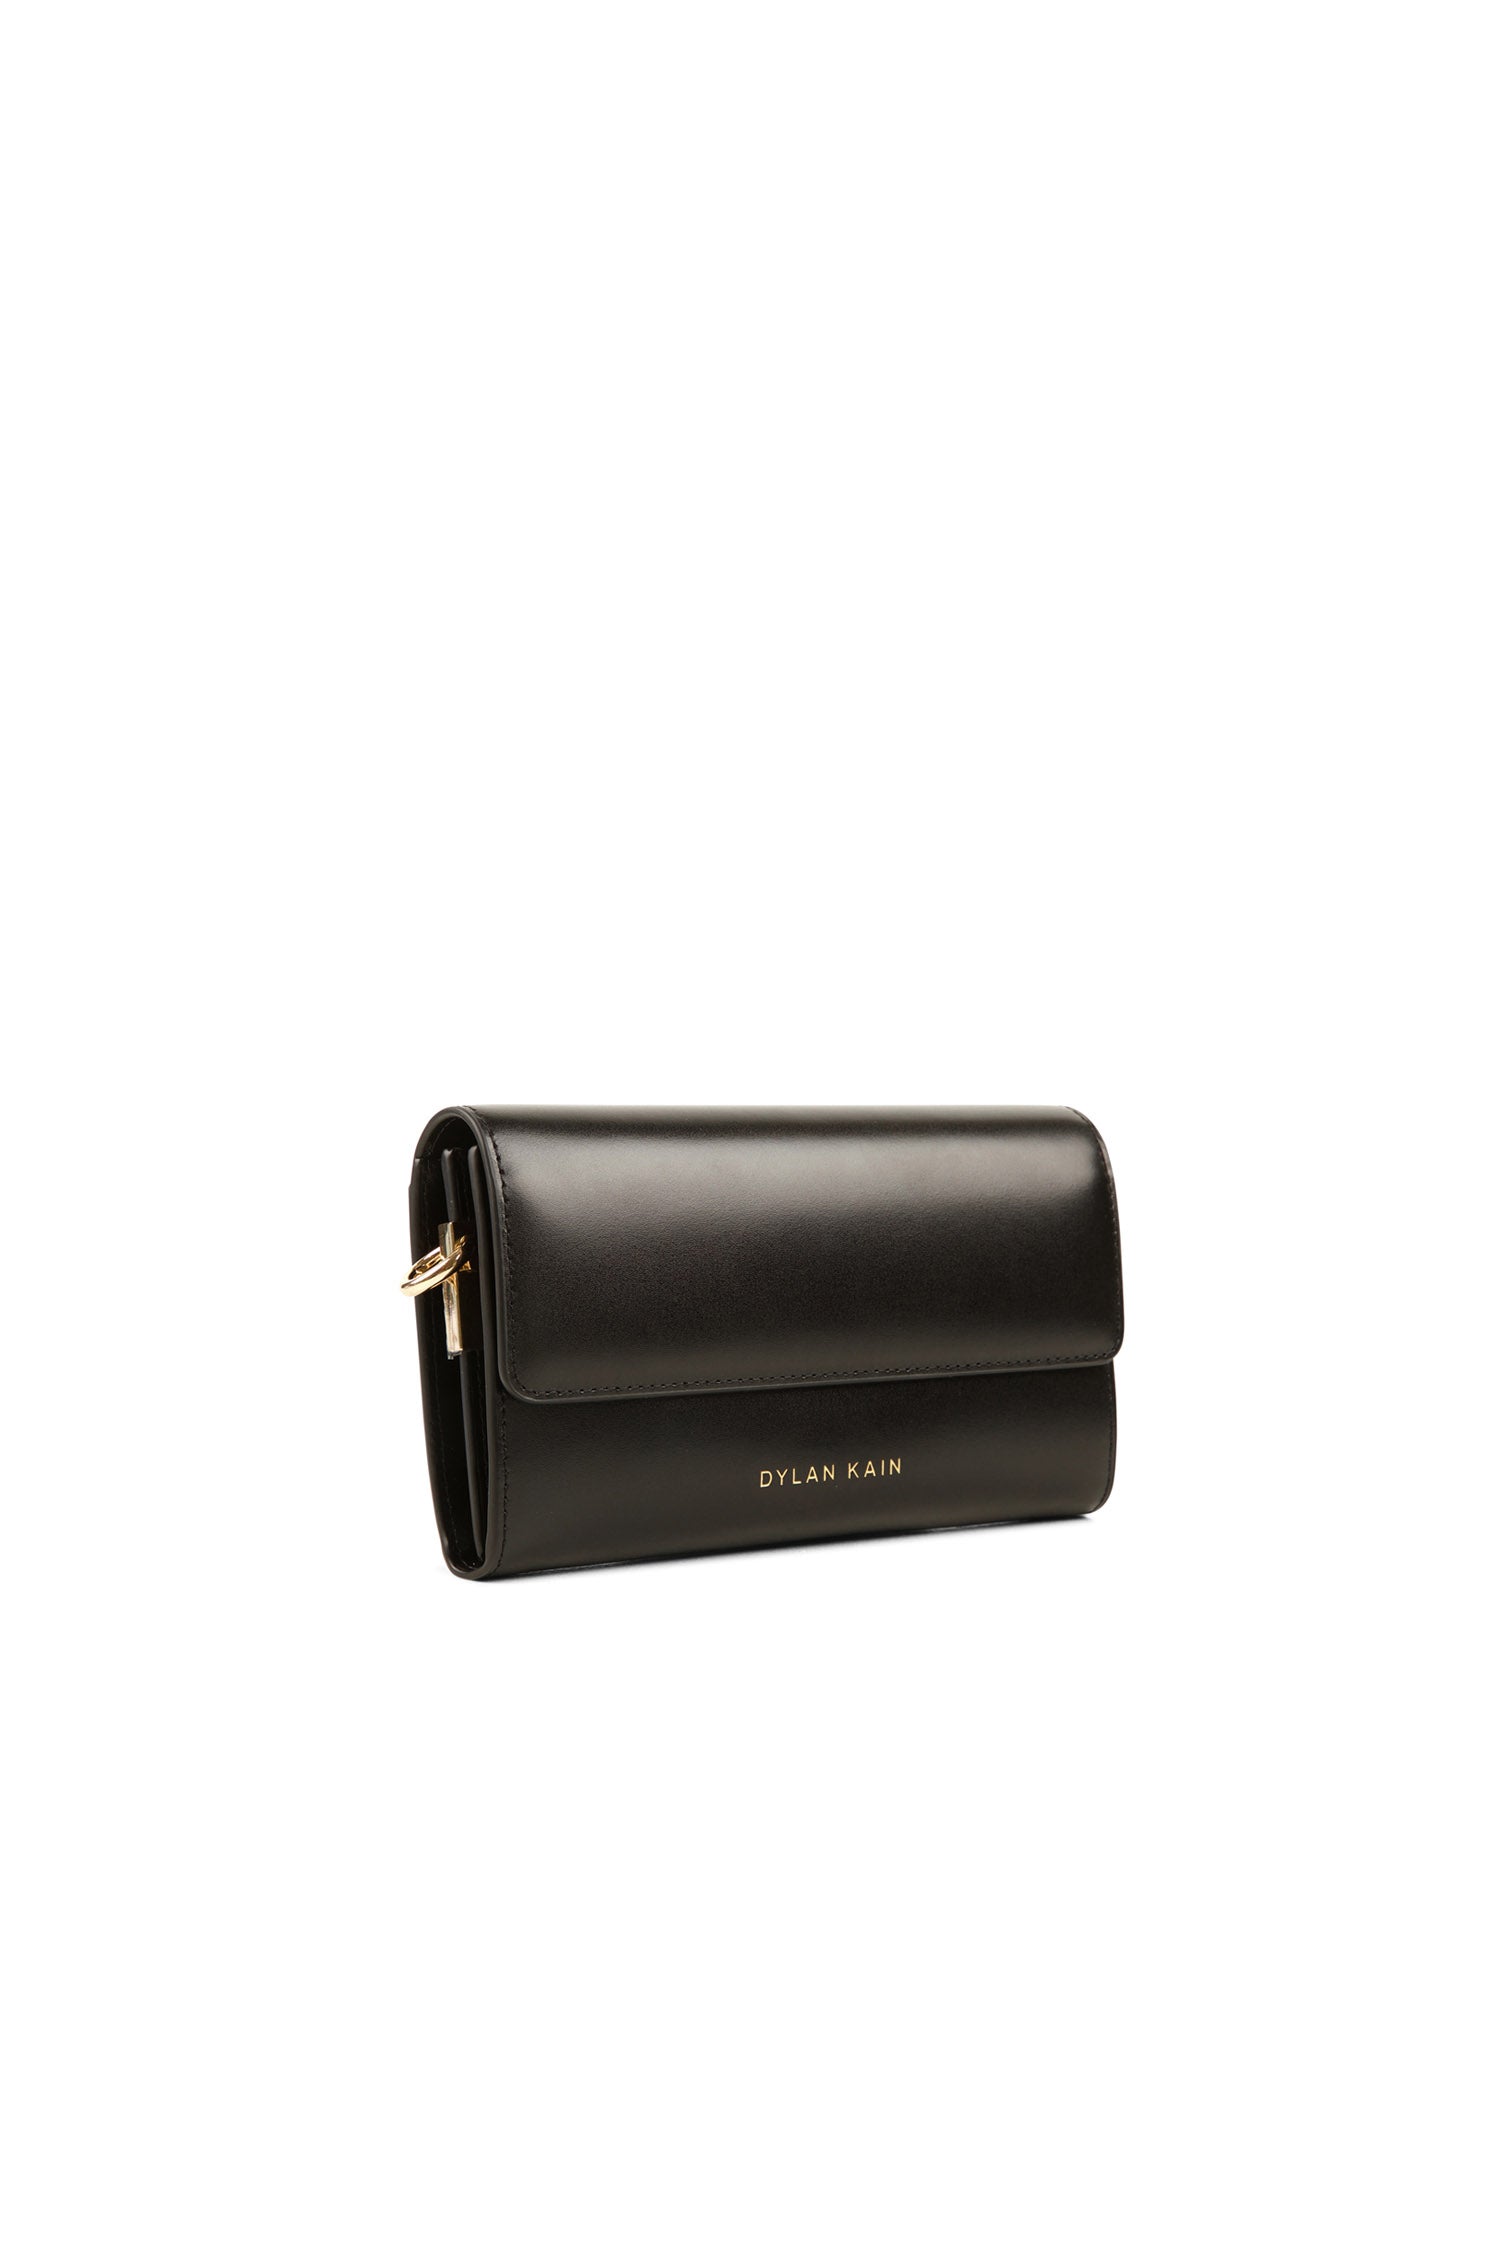 SAMPLE - The Everyday Phone Bag Black Light Gold